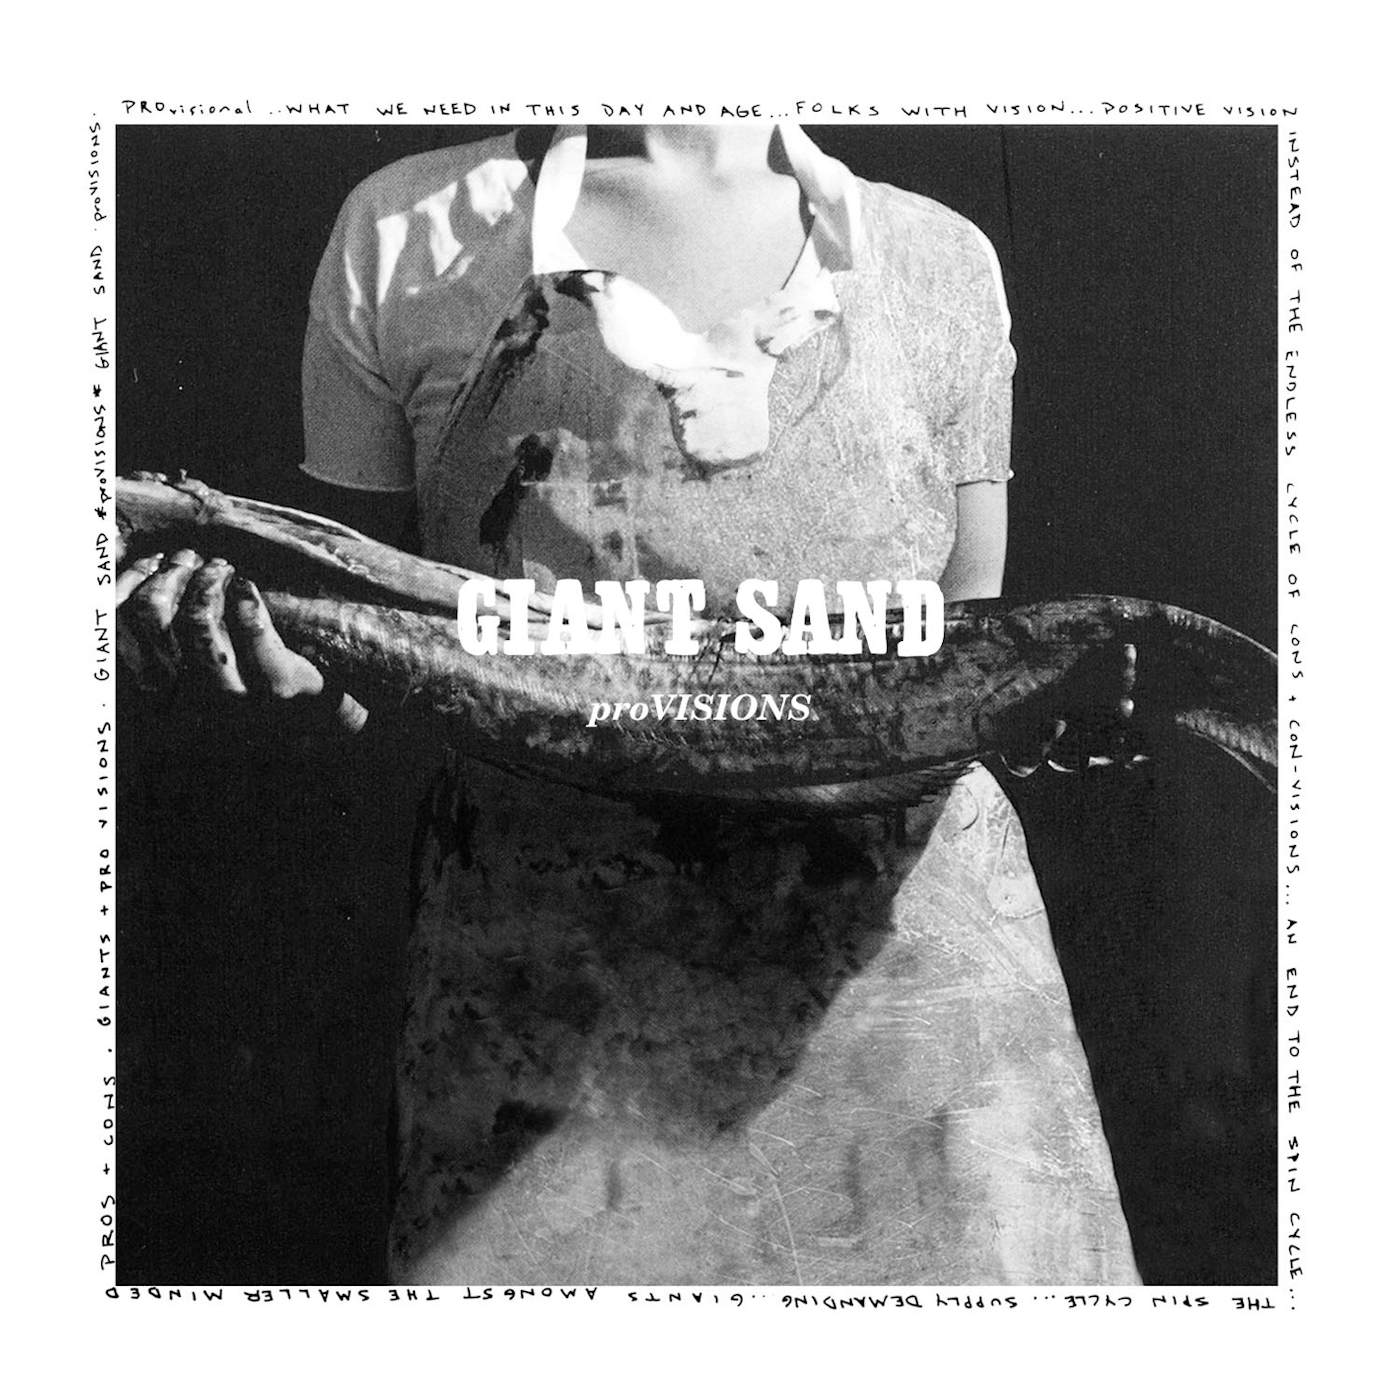 Giant Sand Provisions Vinyl Record